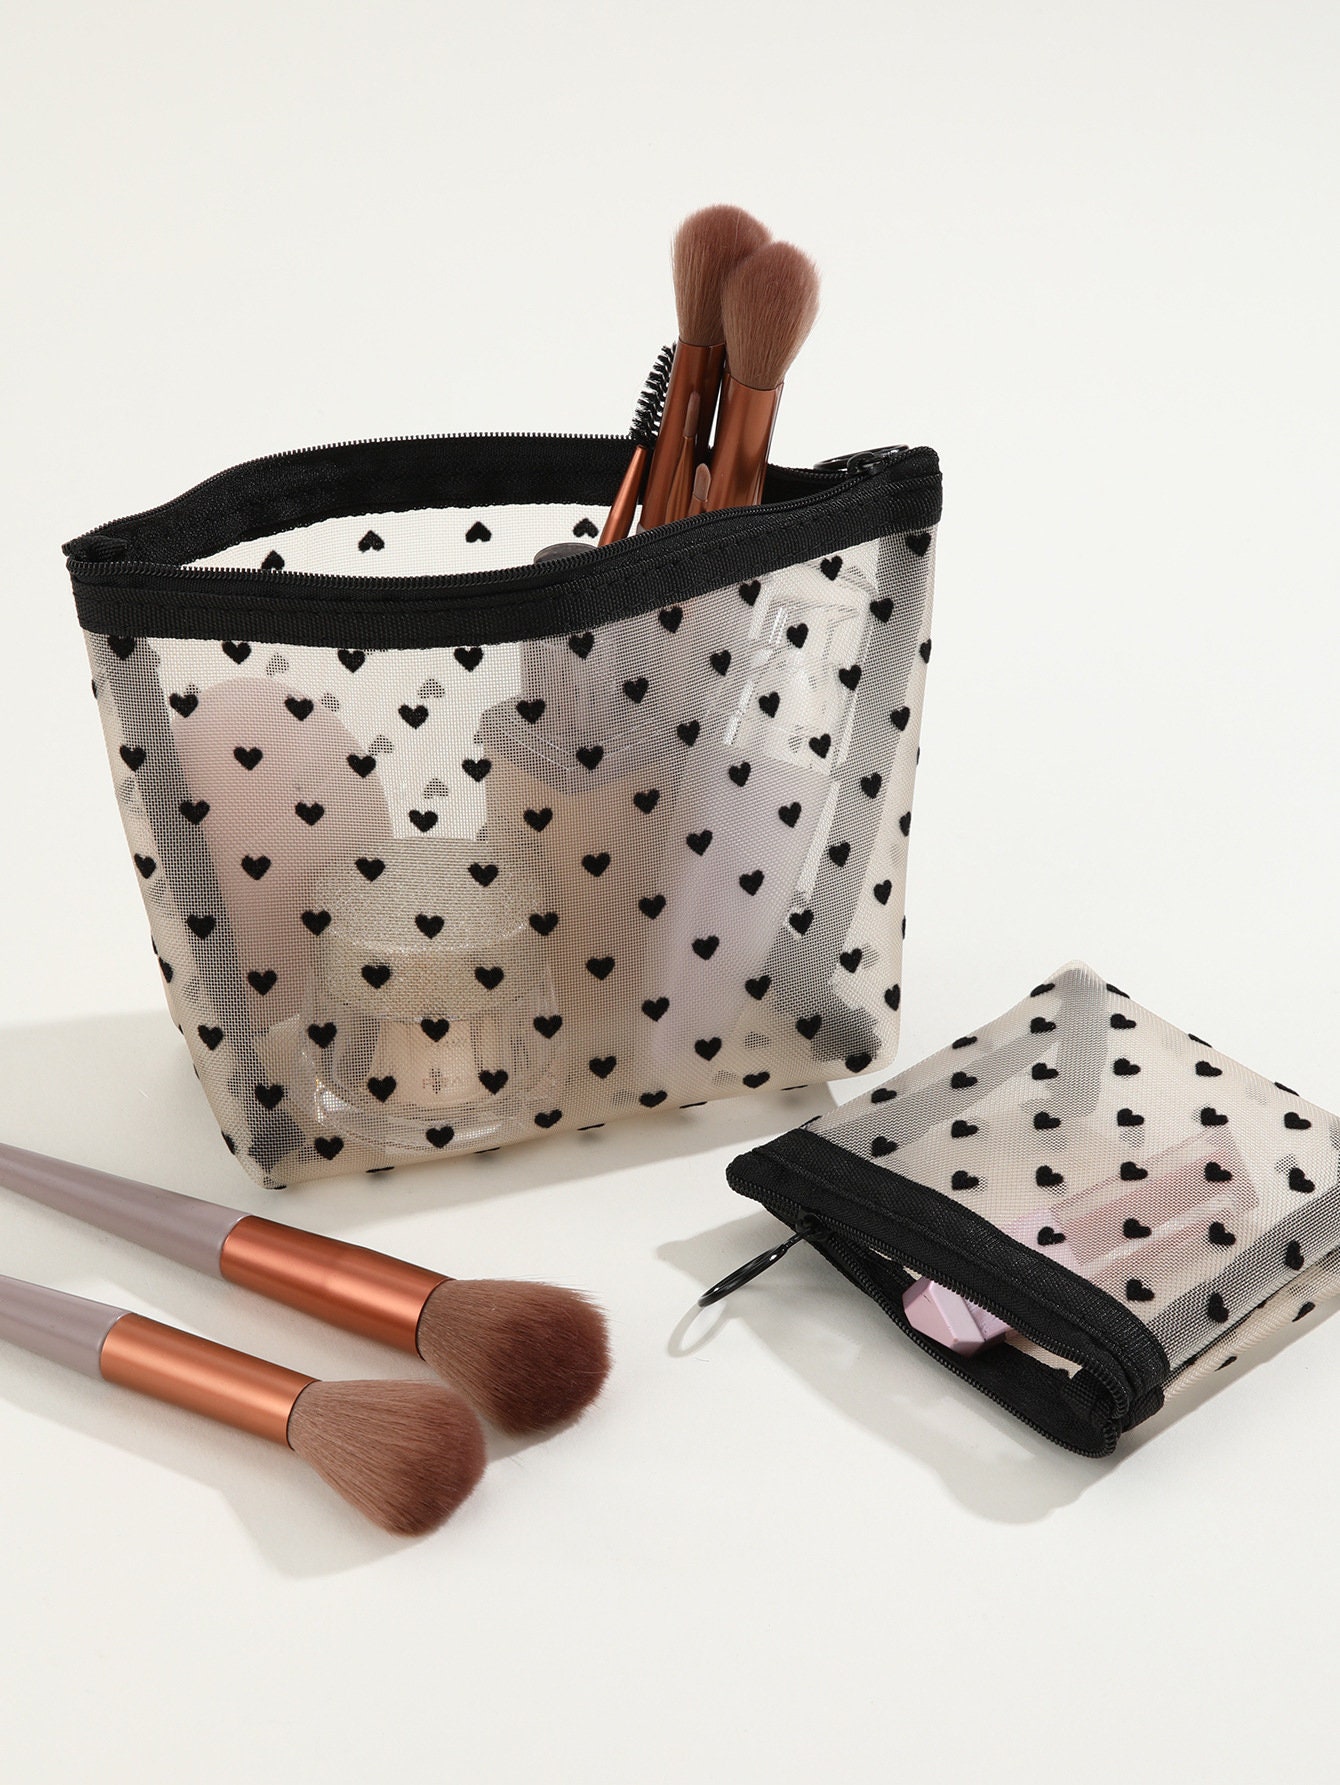 5 Pieces Heart Mesh Makeup Bags Set Portable Travel Toiletry Bag